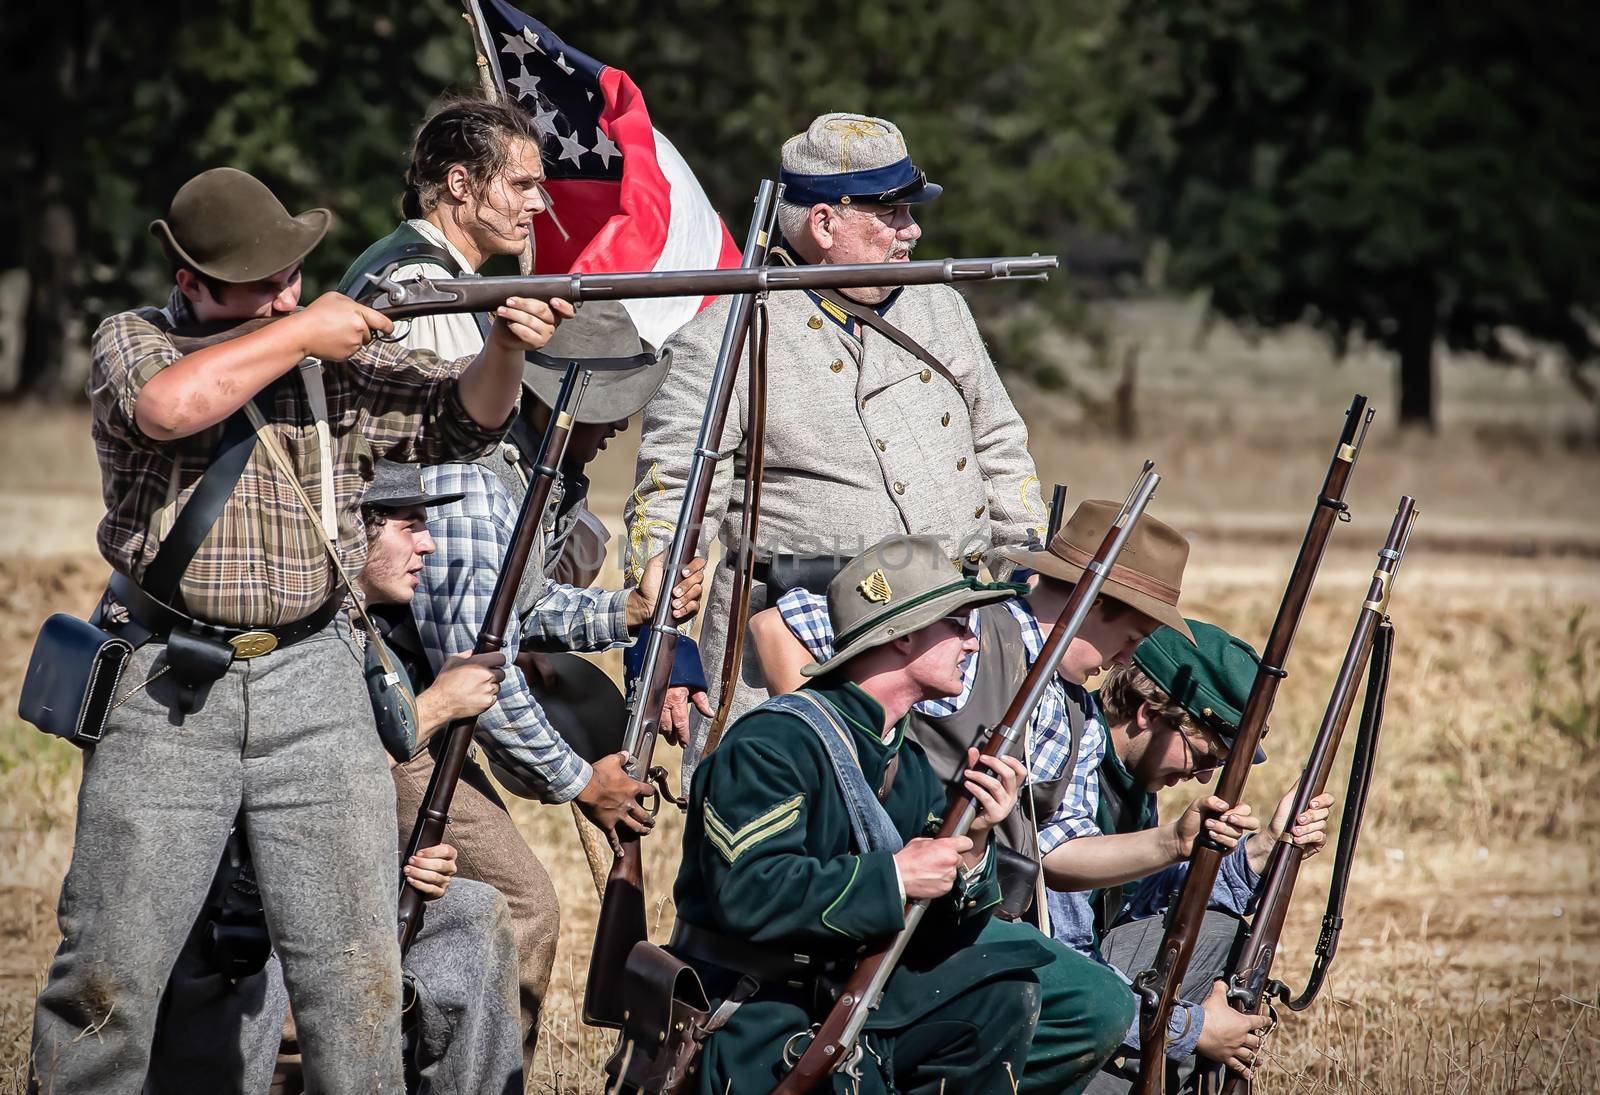 Confederates in Combat by teacherdad48@yahoo.com